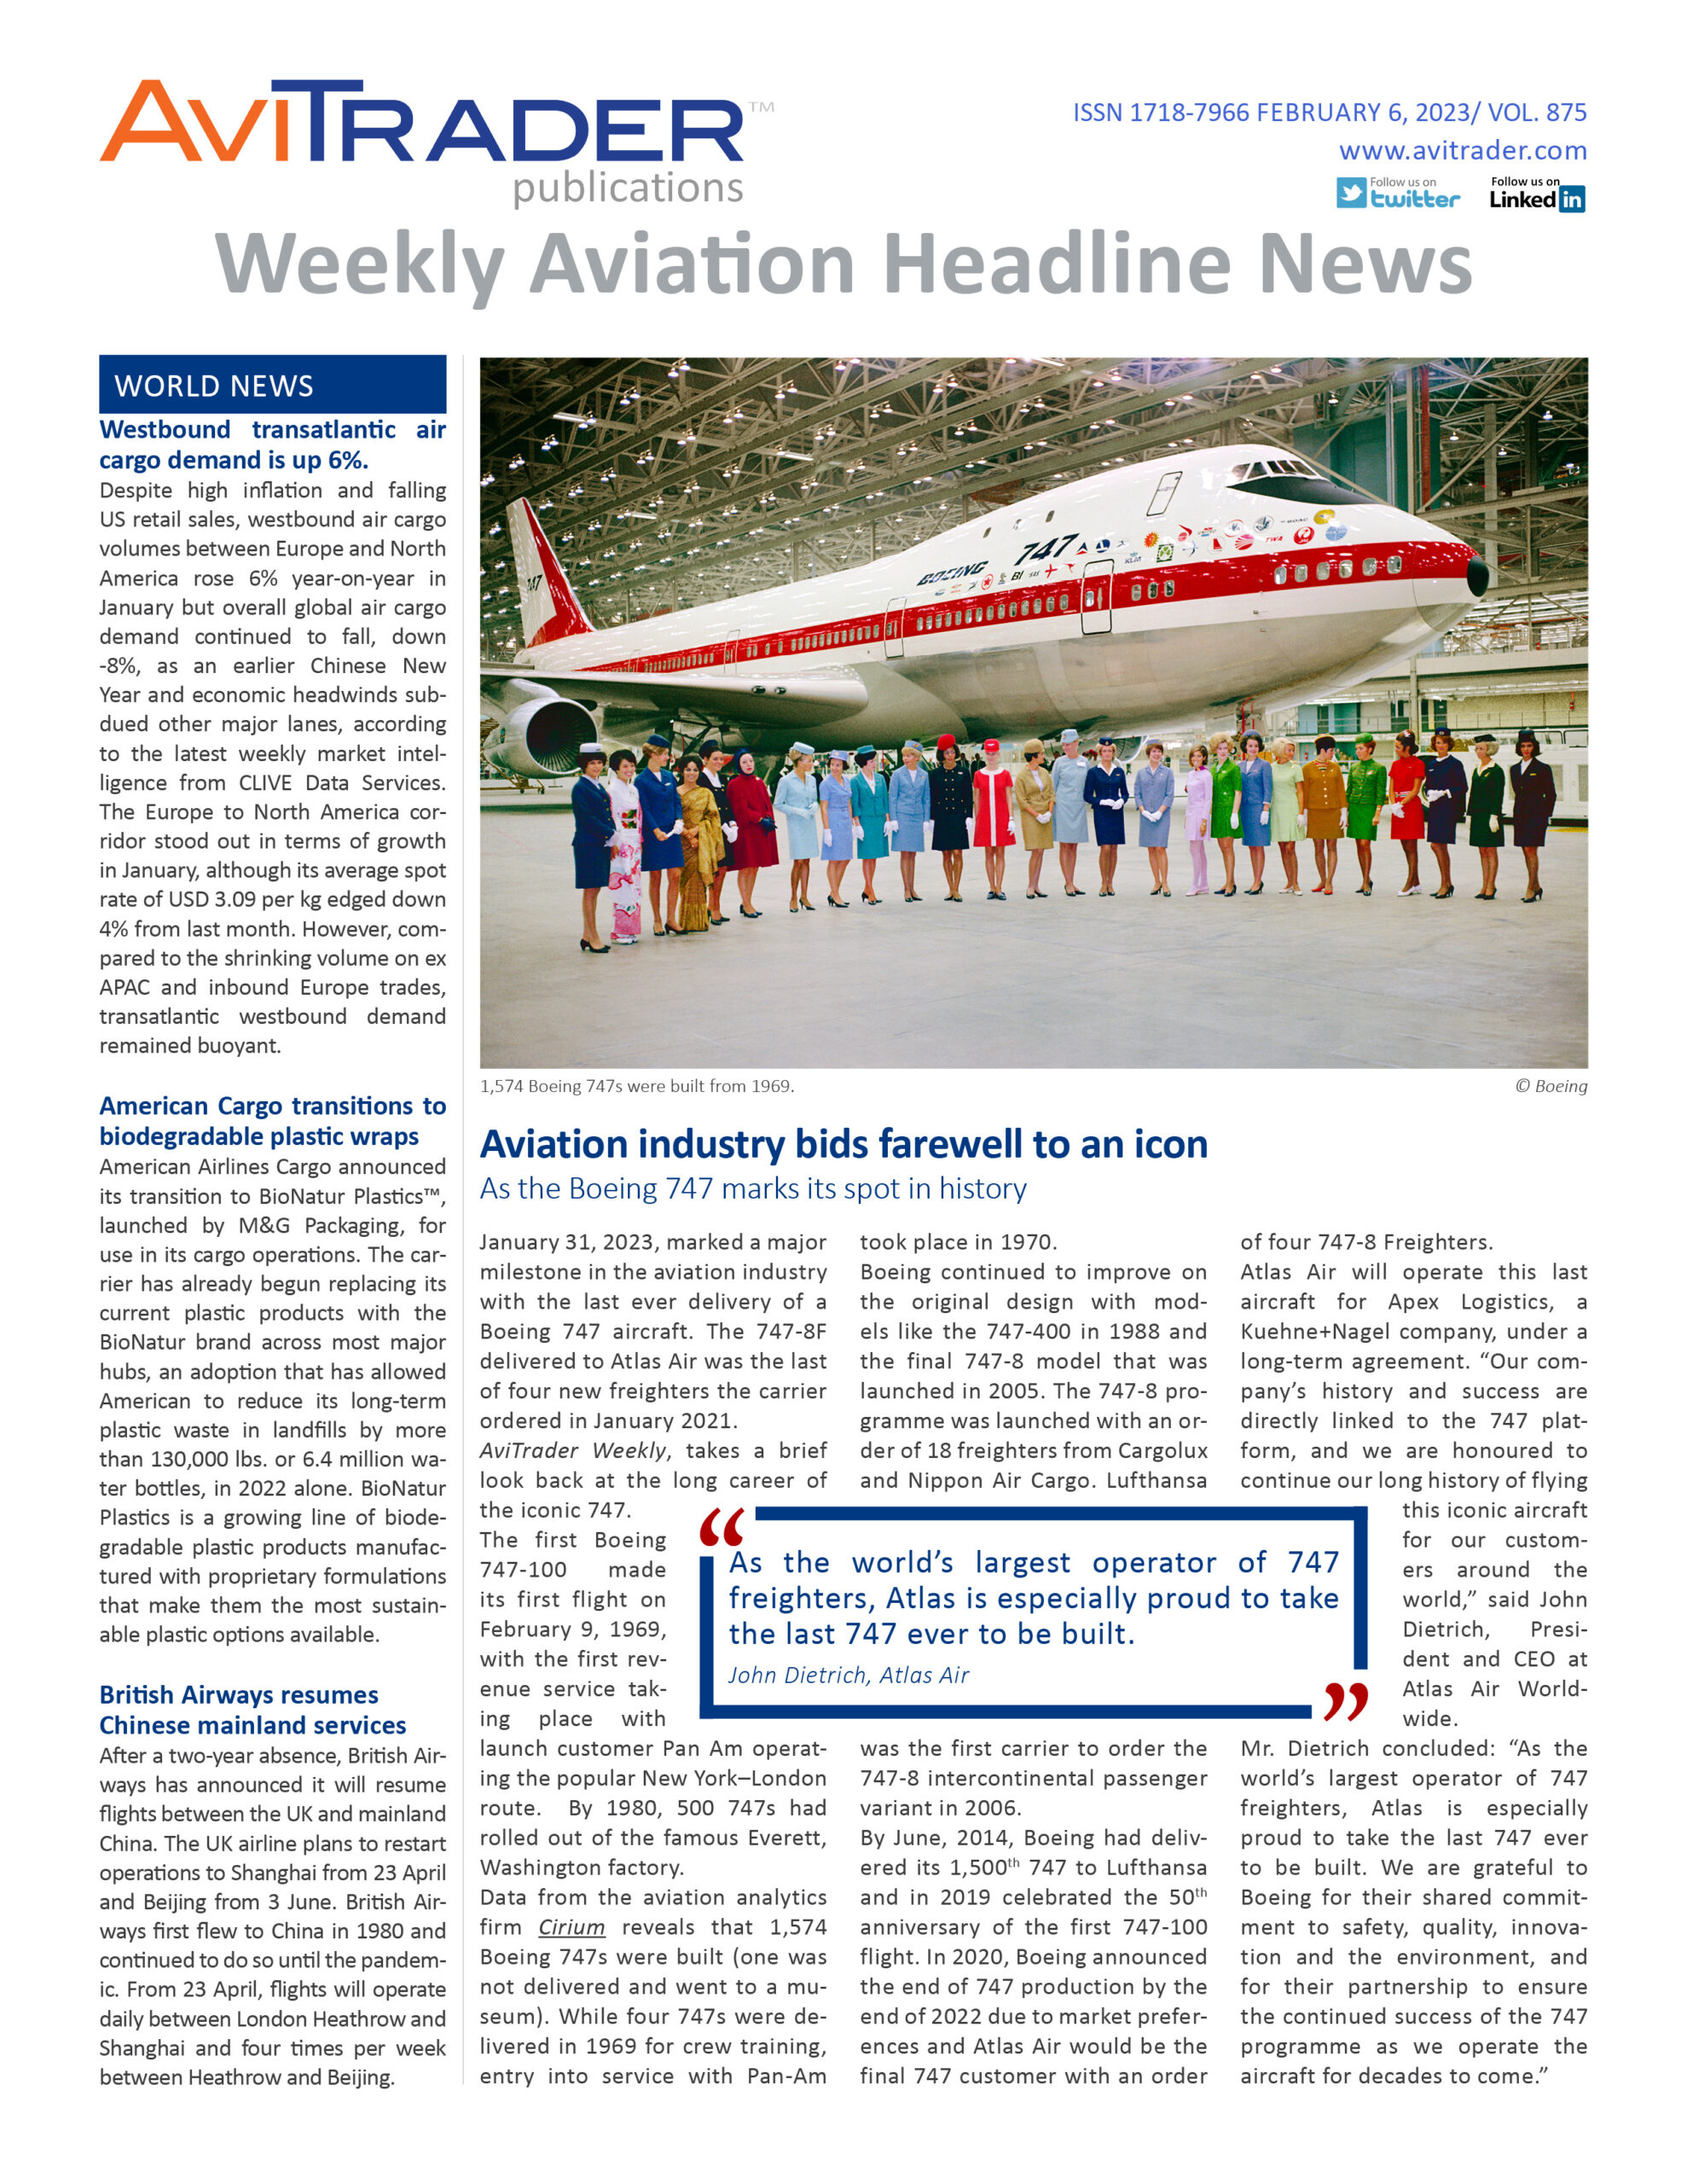 AviTrader_Weekly_Headline_News_Cover_2023-02-06